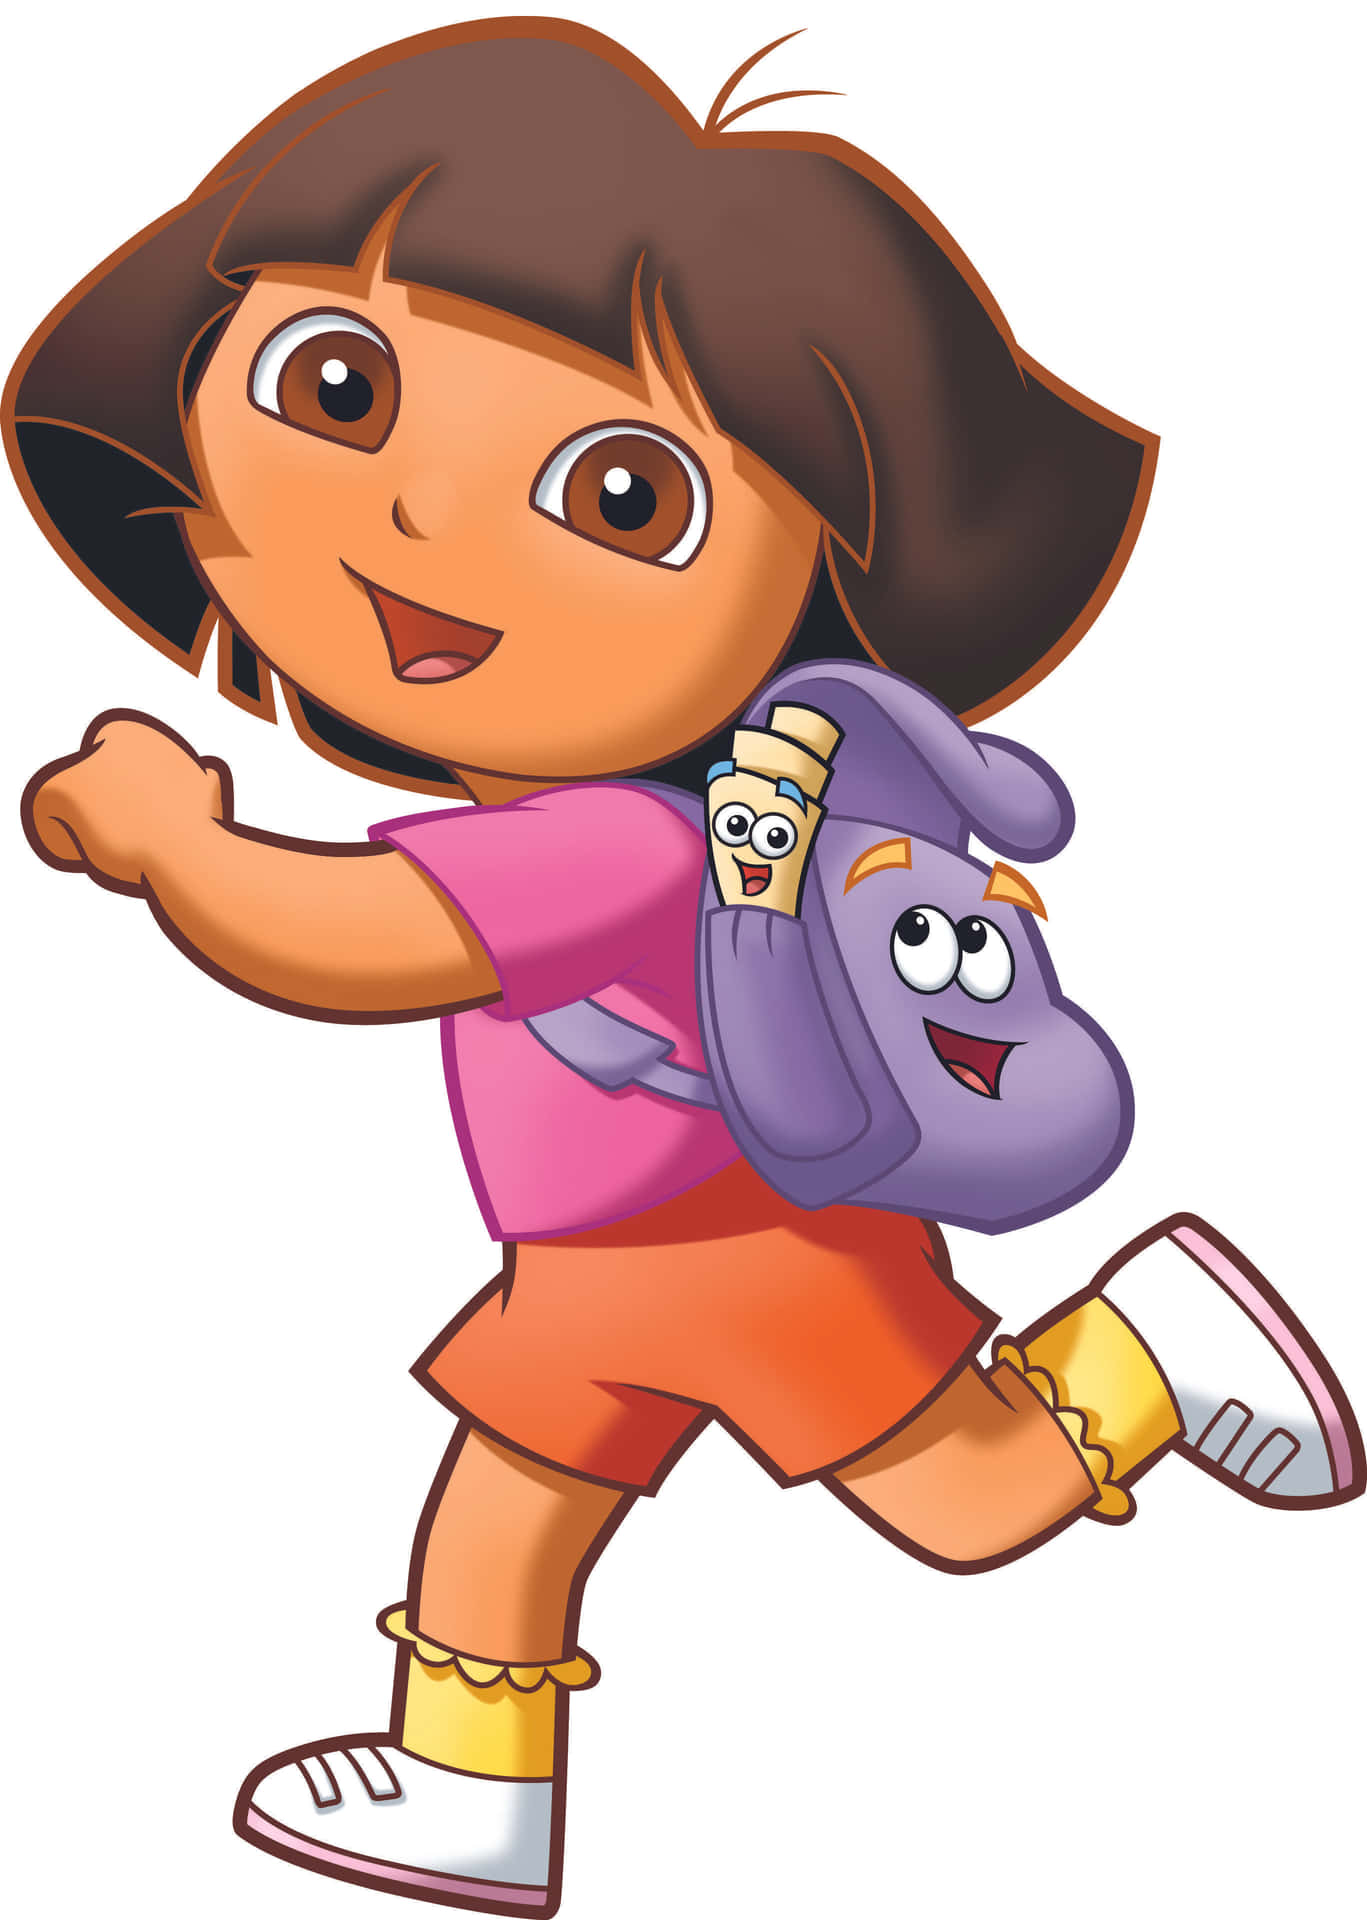 Join Dora on her adventure!